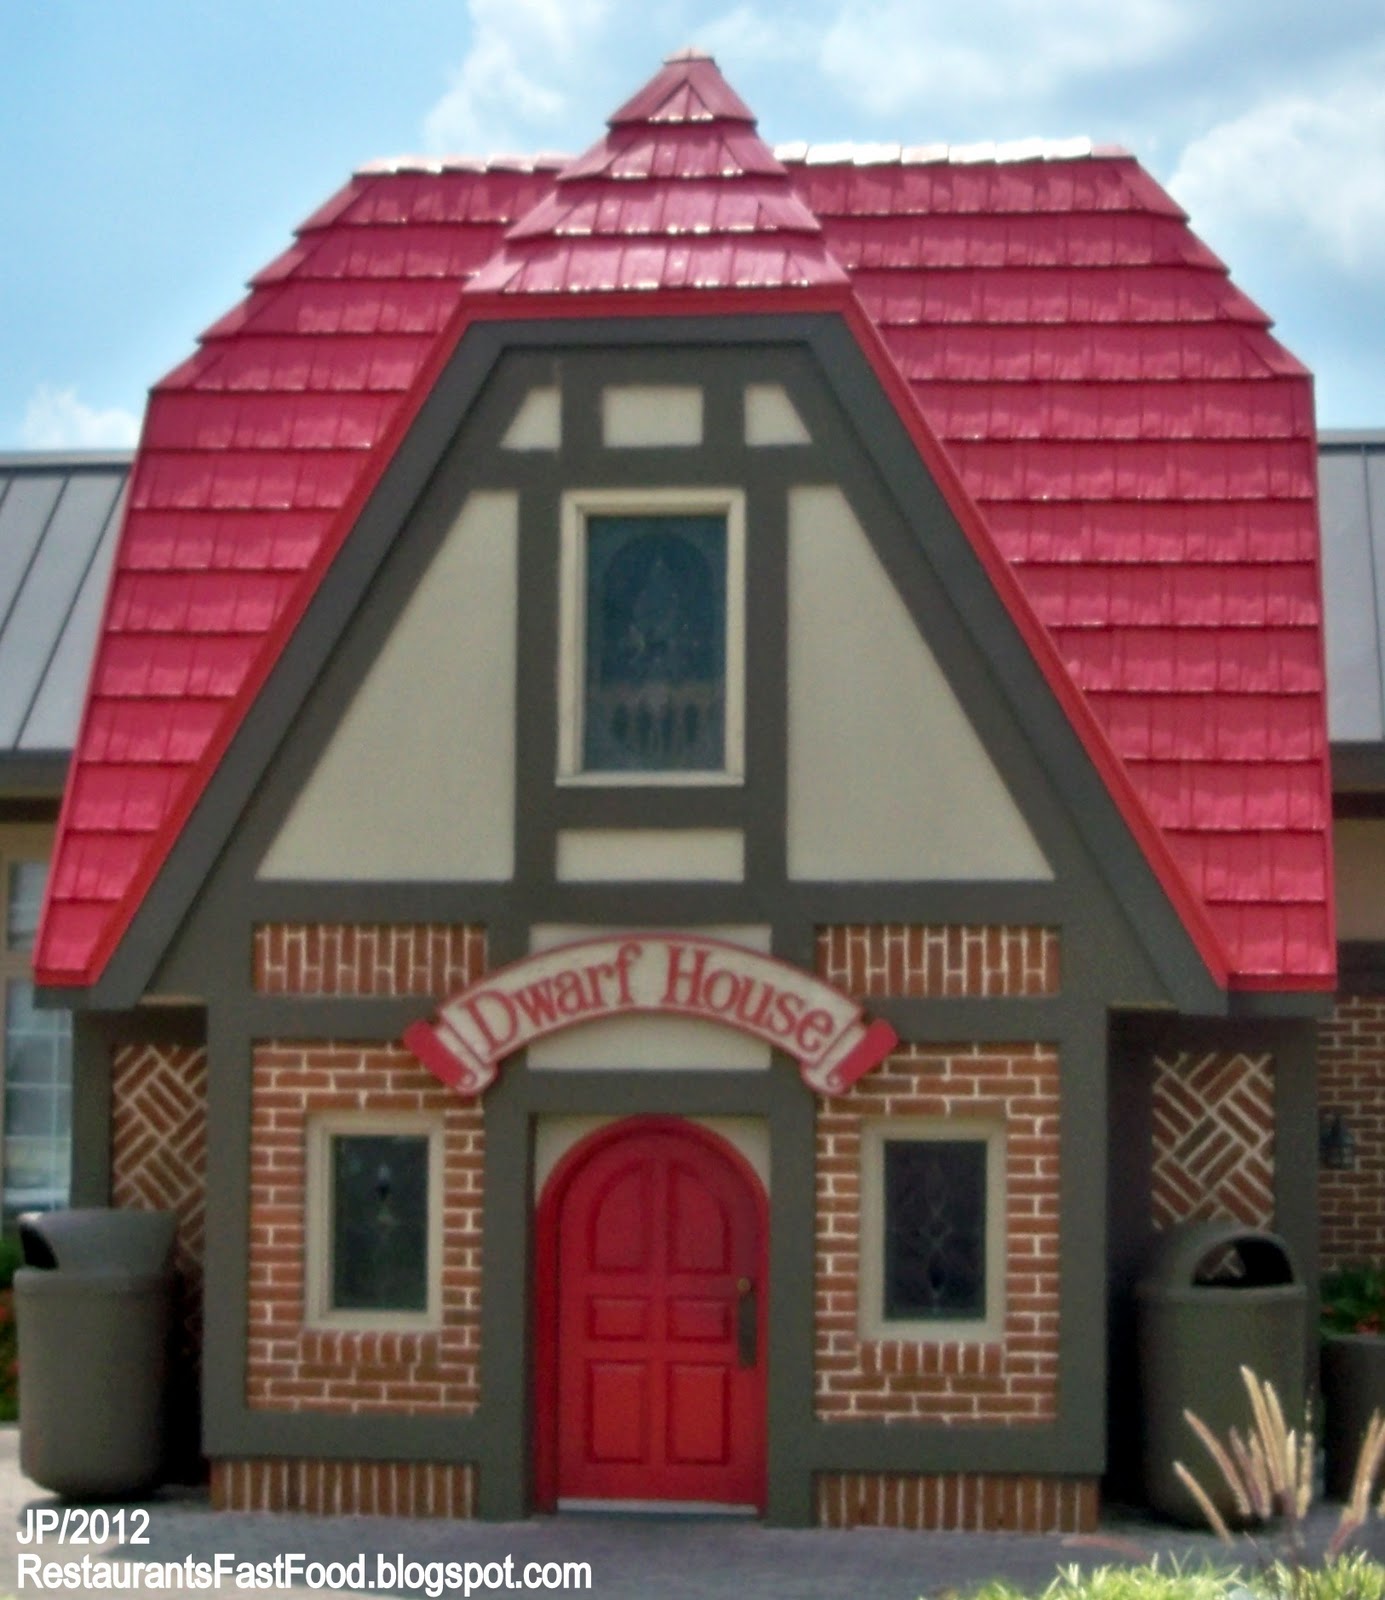 Dwarf House